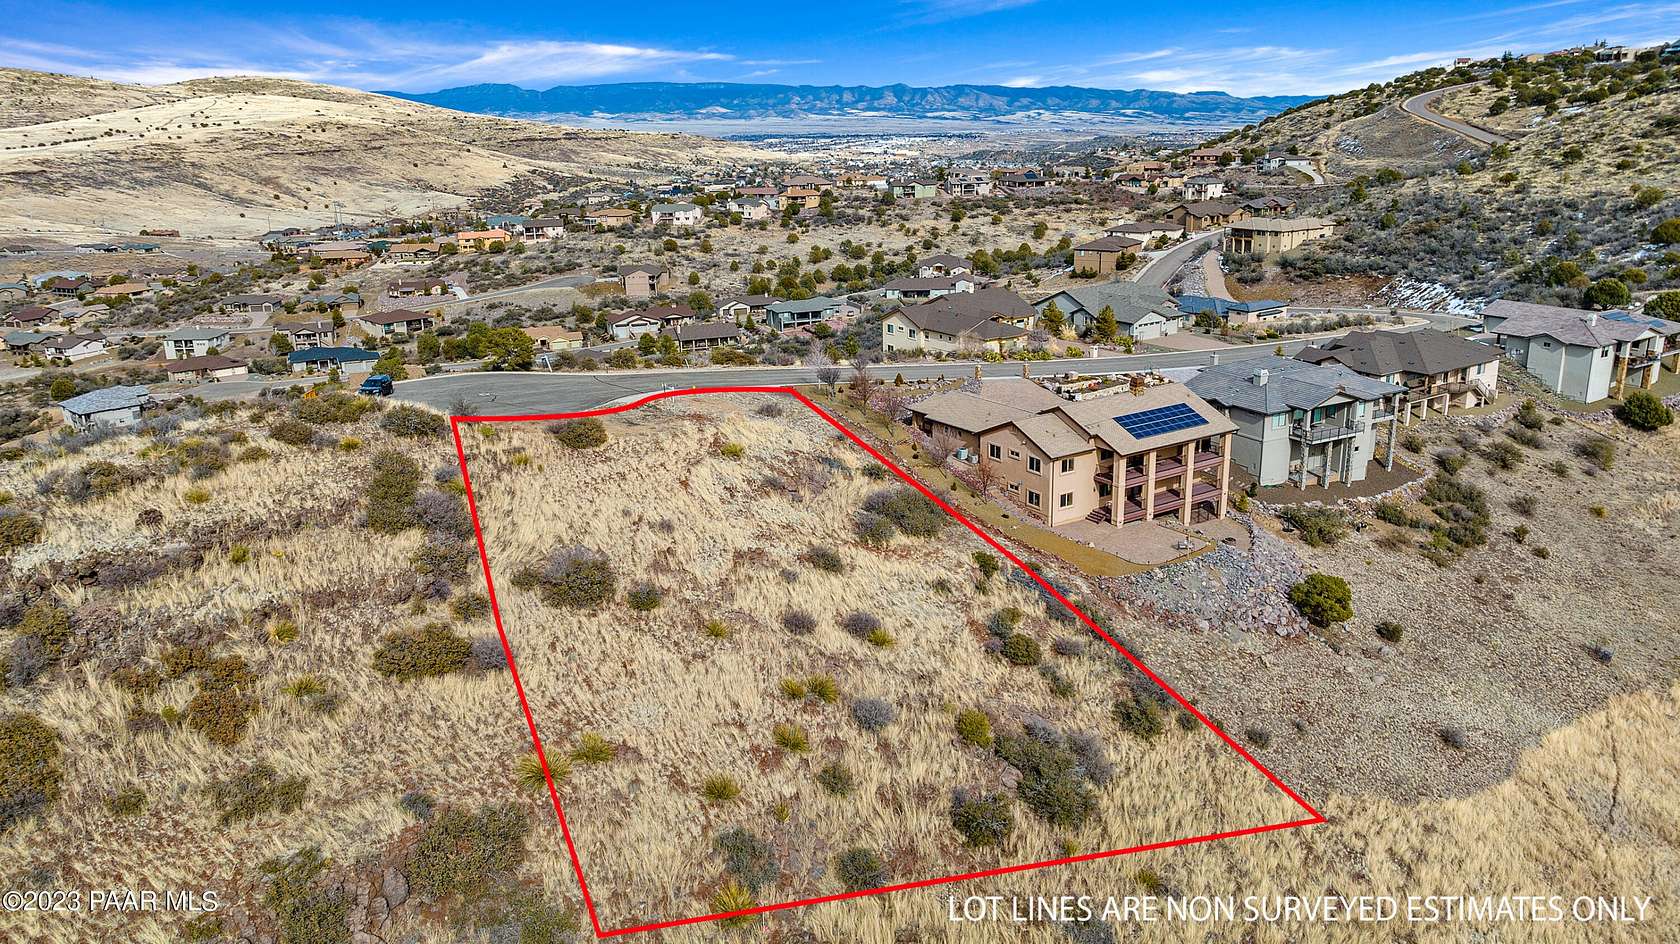 0.49 Acres of Residential Land for Sale in Prescott, Arizona